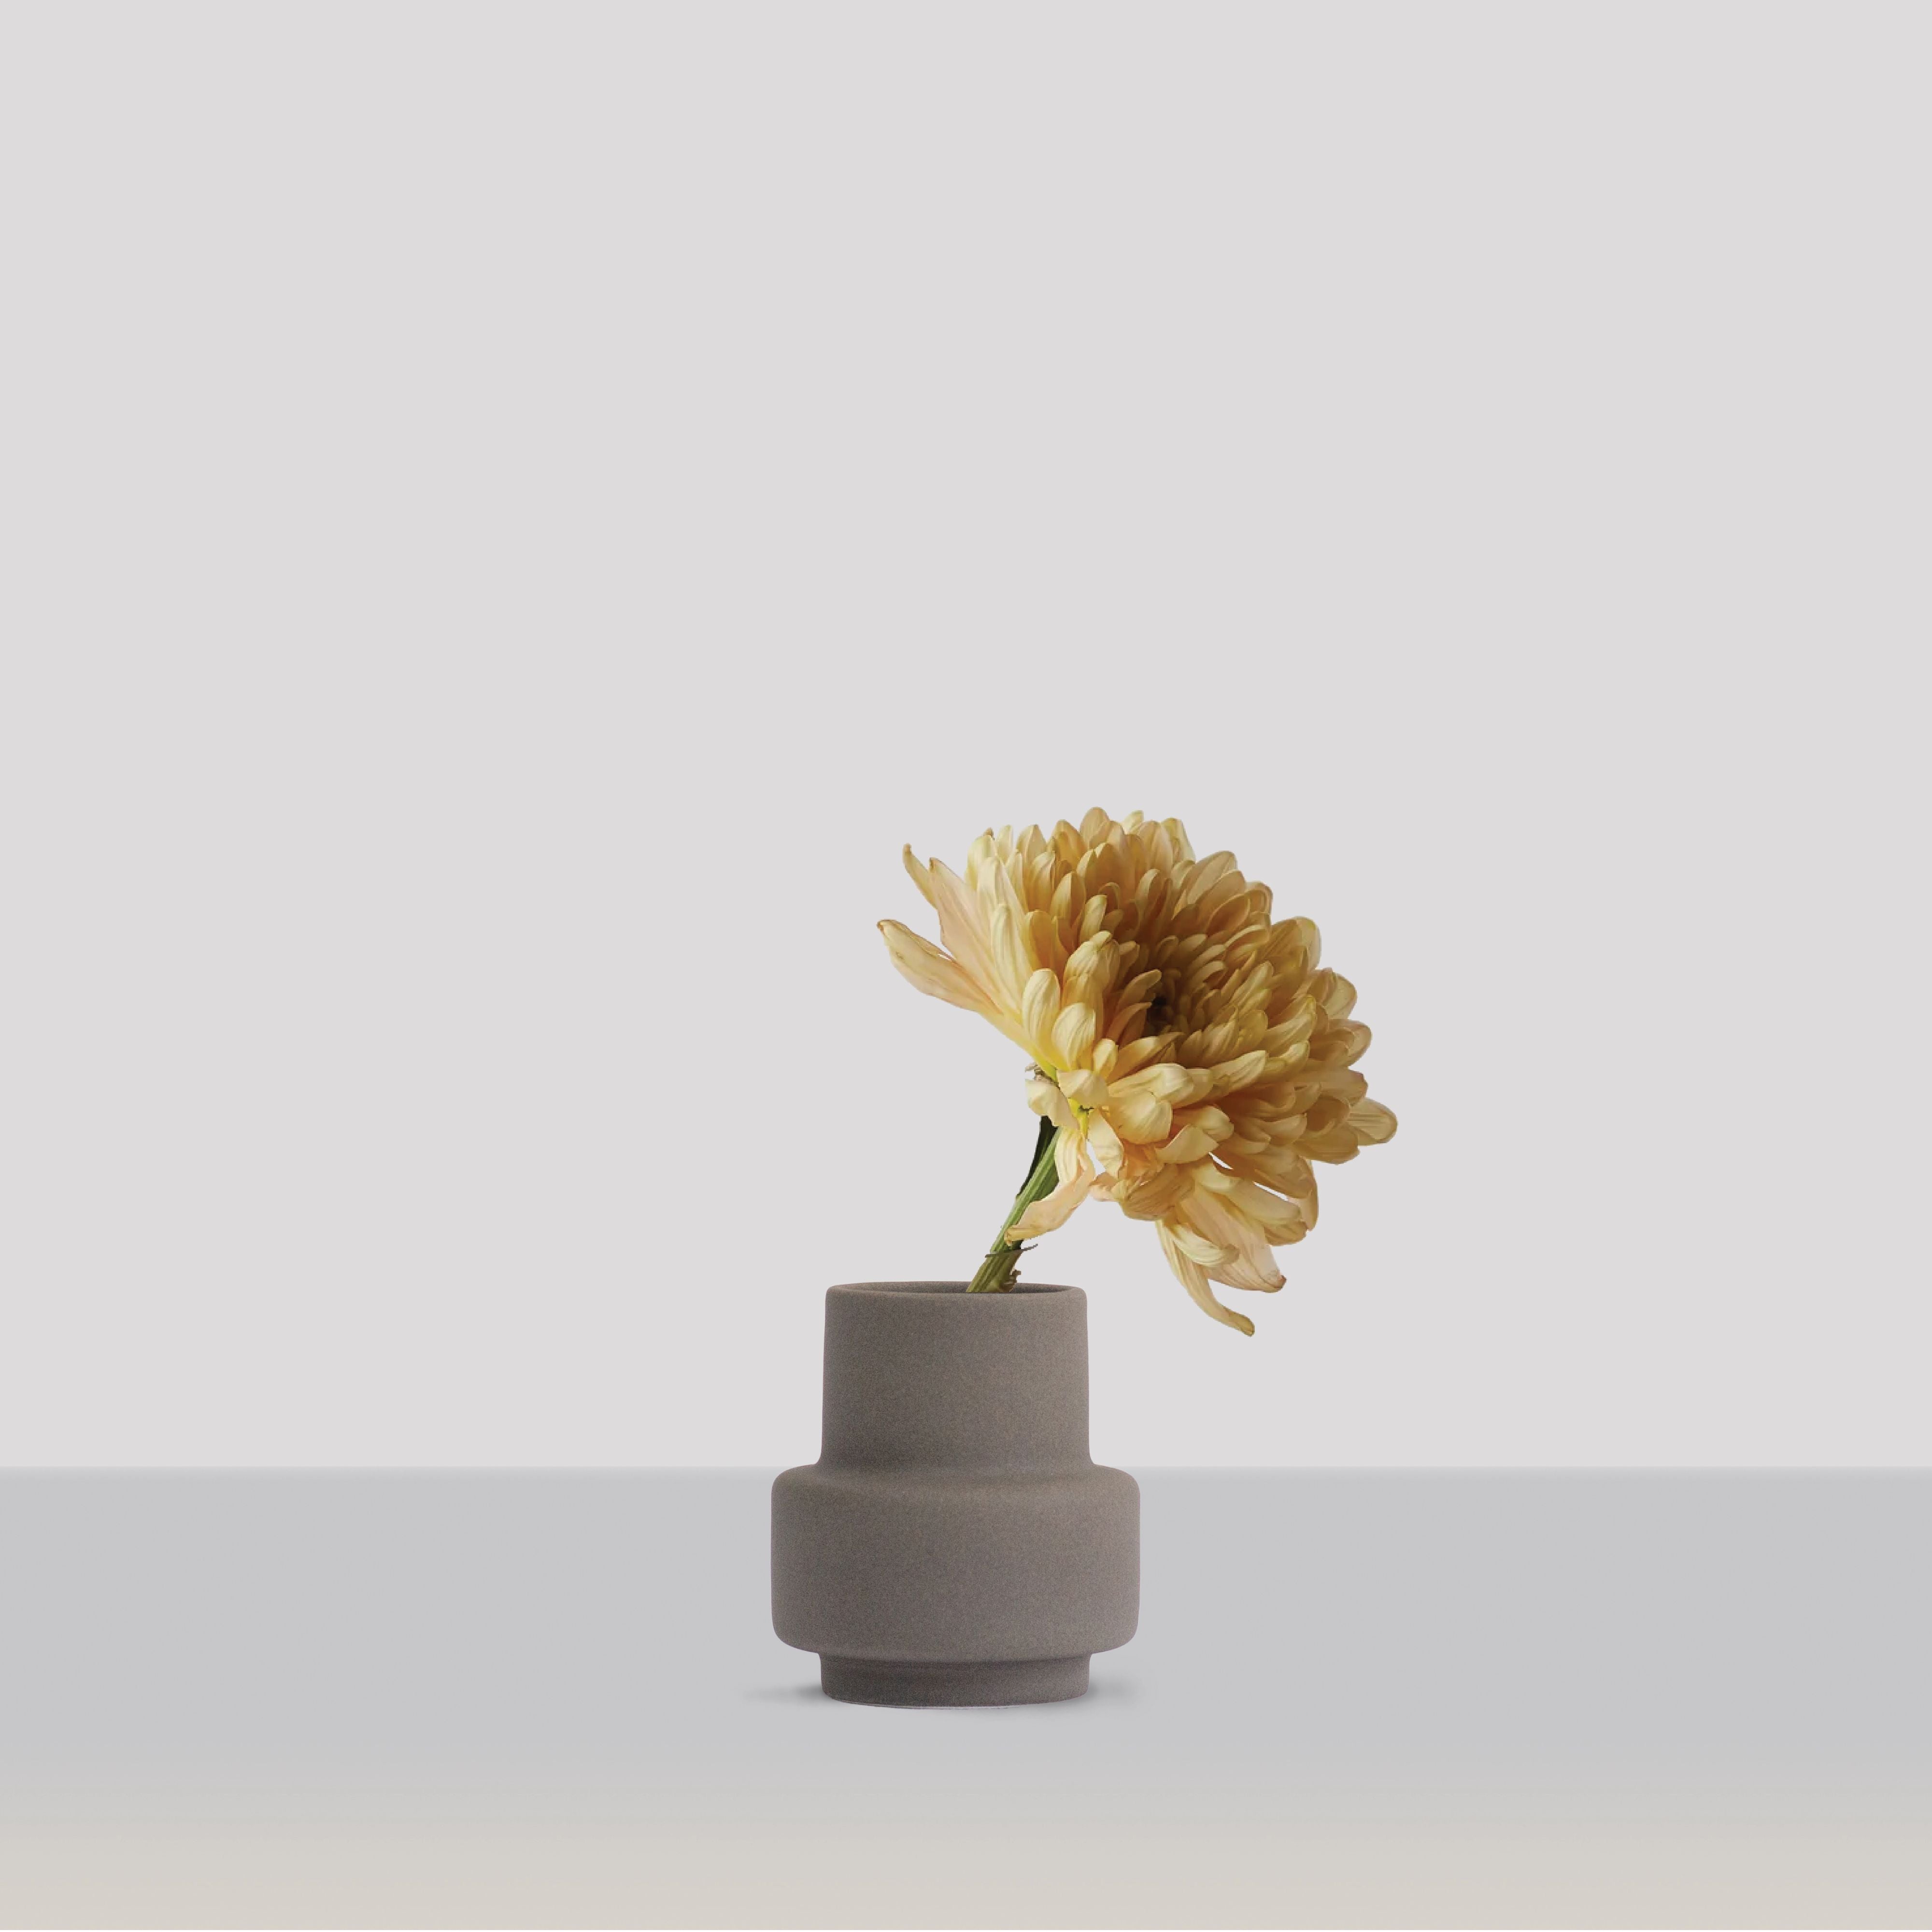 RO -Kollektion Hurrikan Keramik Vase klein, dunkler Stein